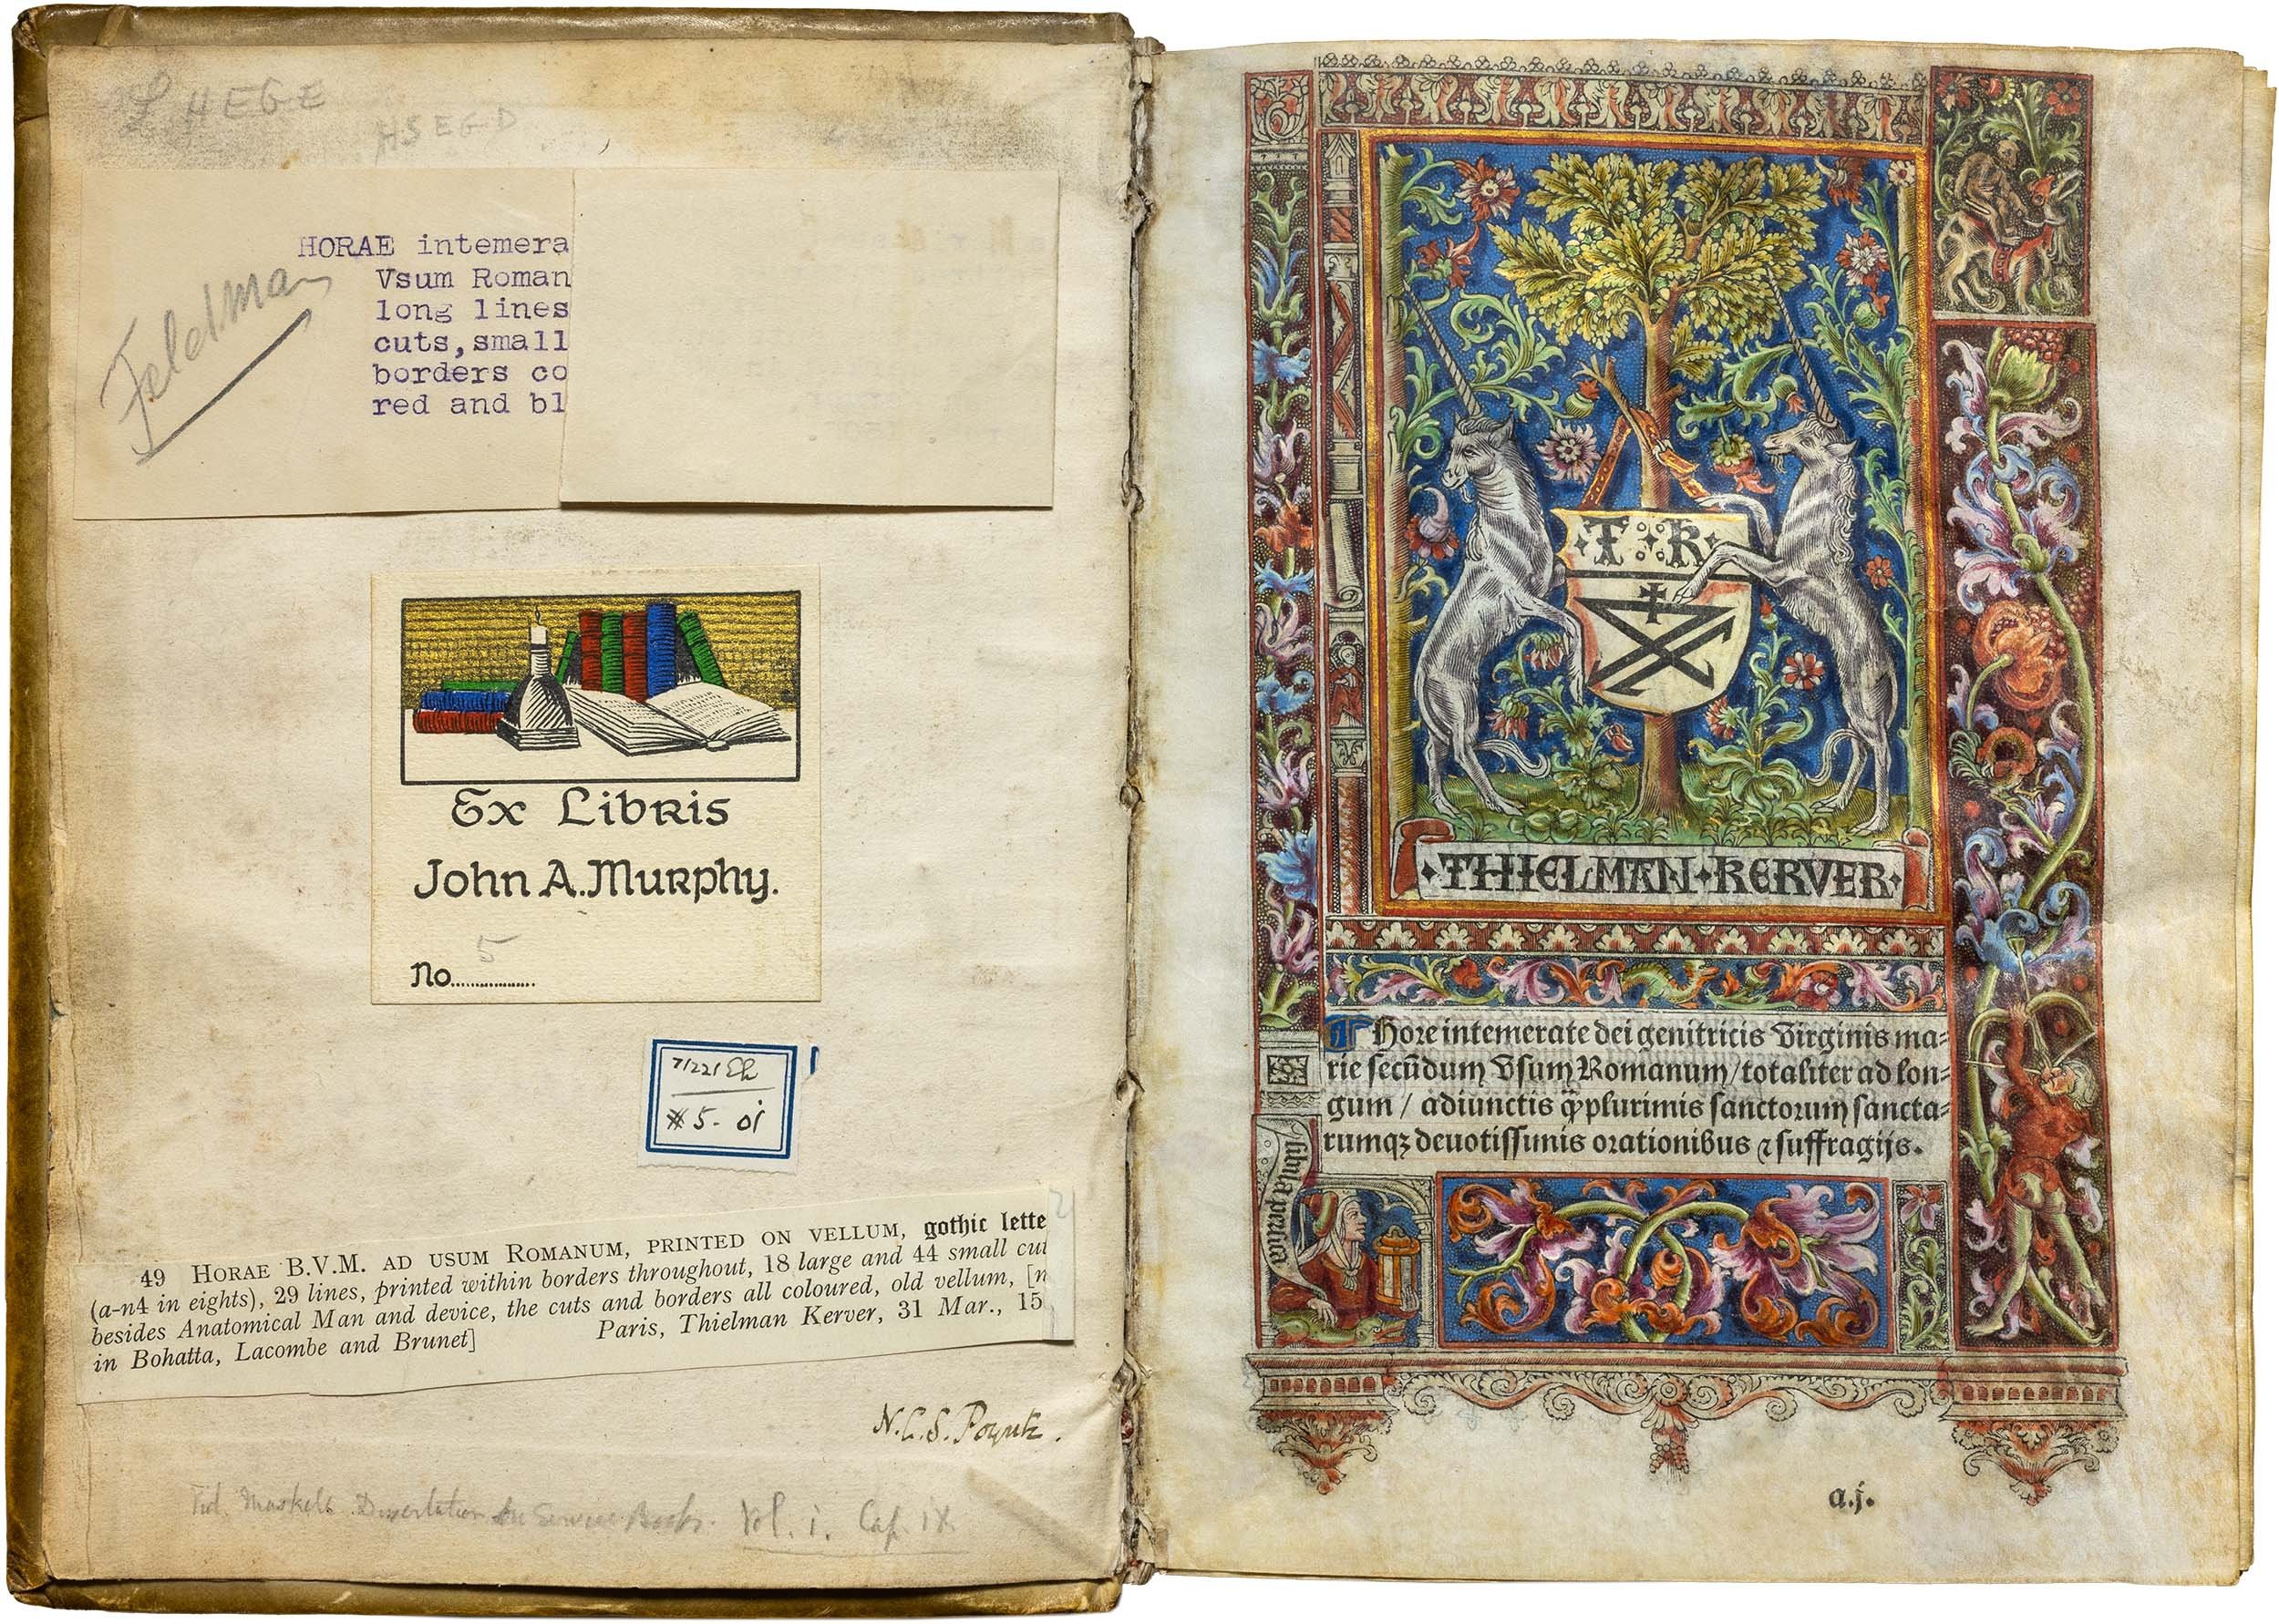 Horae-bmv-31-march-1511-kerver-printed-book-of-hours-illuminated-copy-vellum-04.jpg